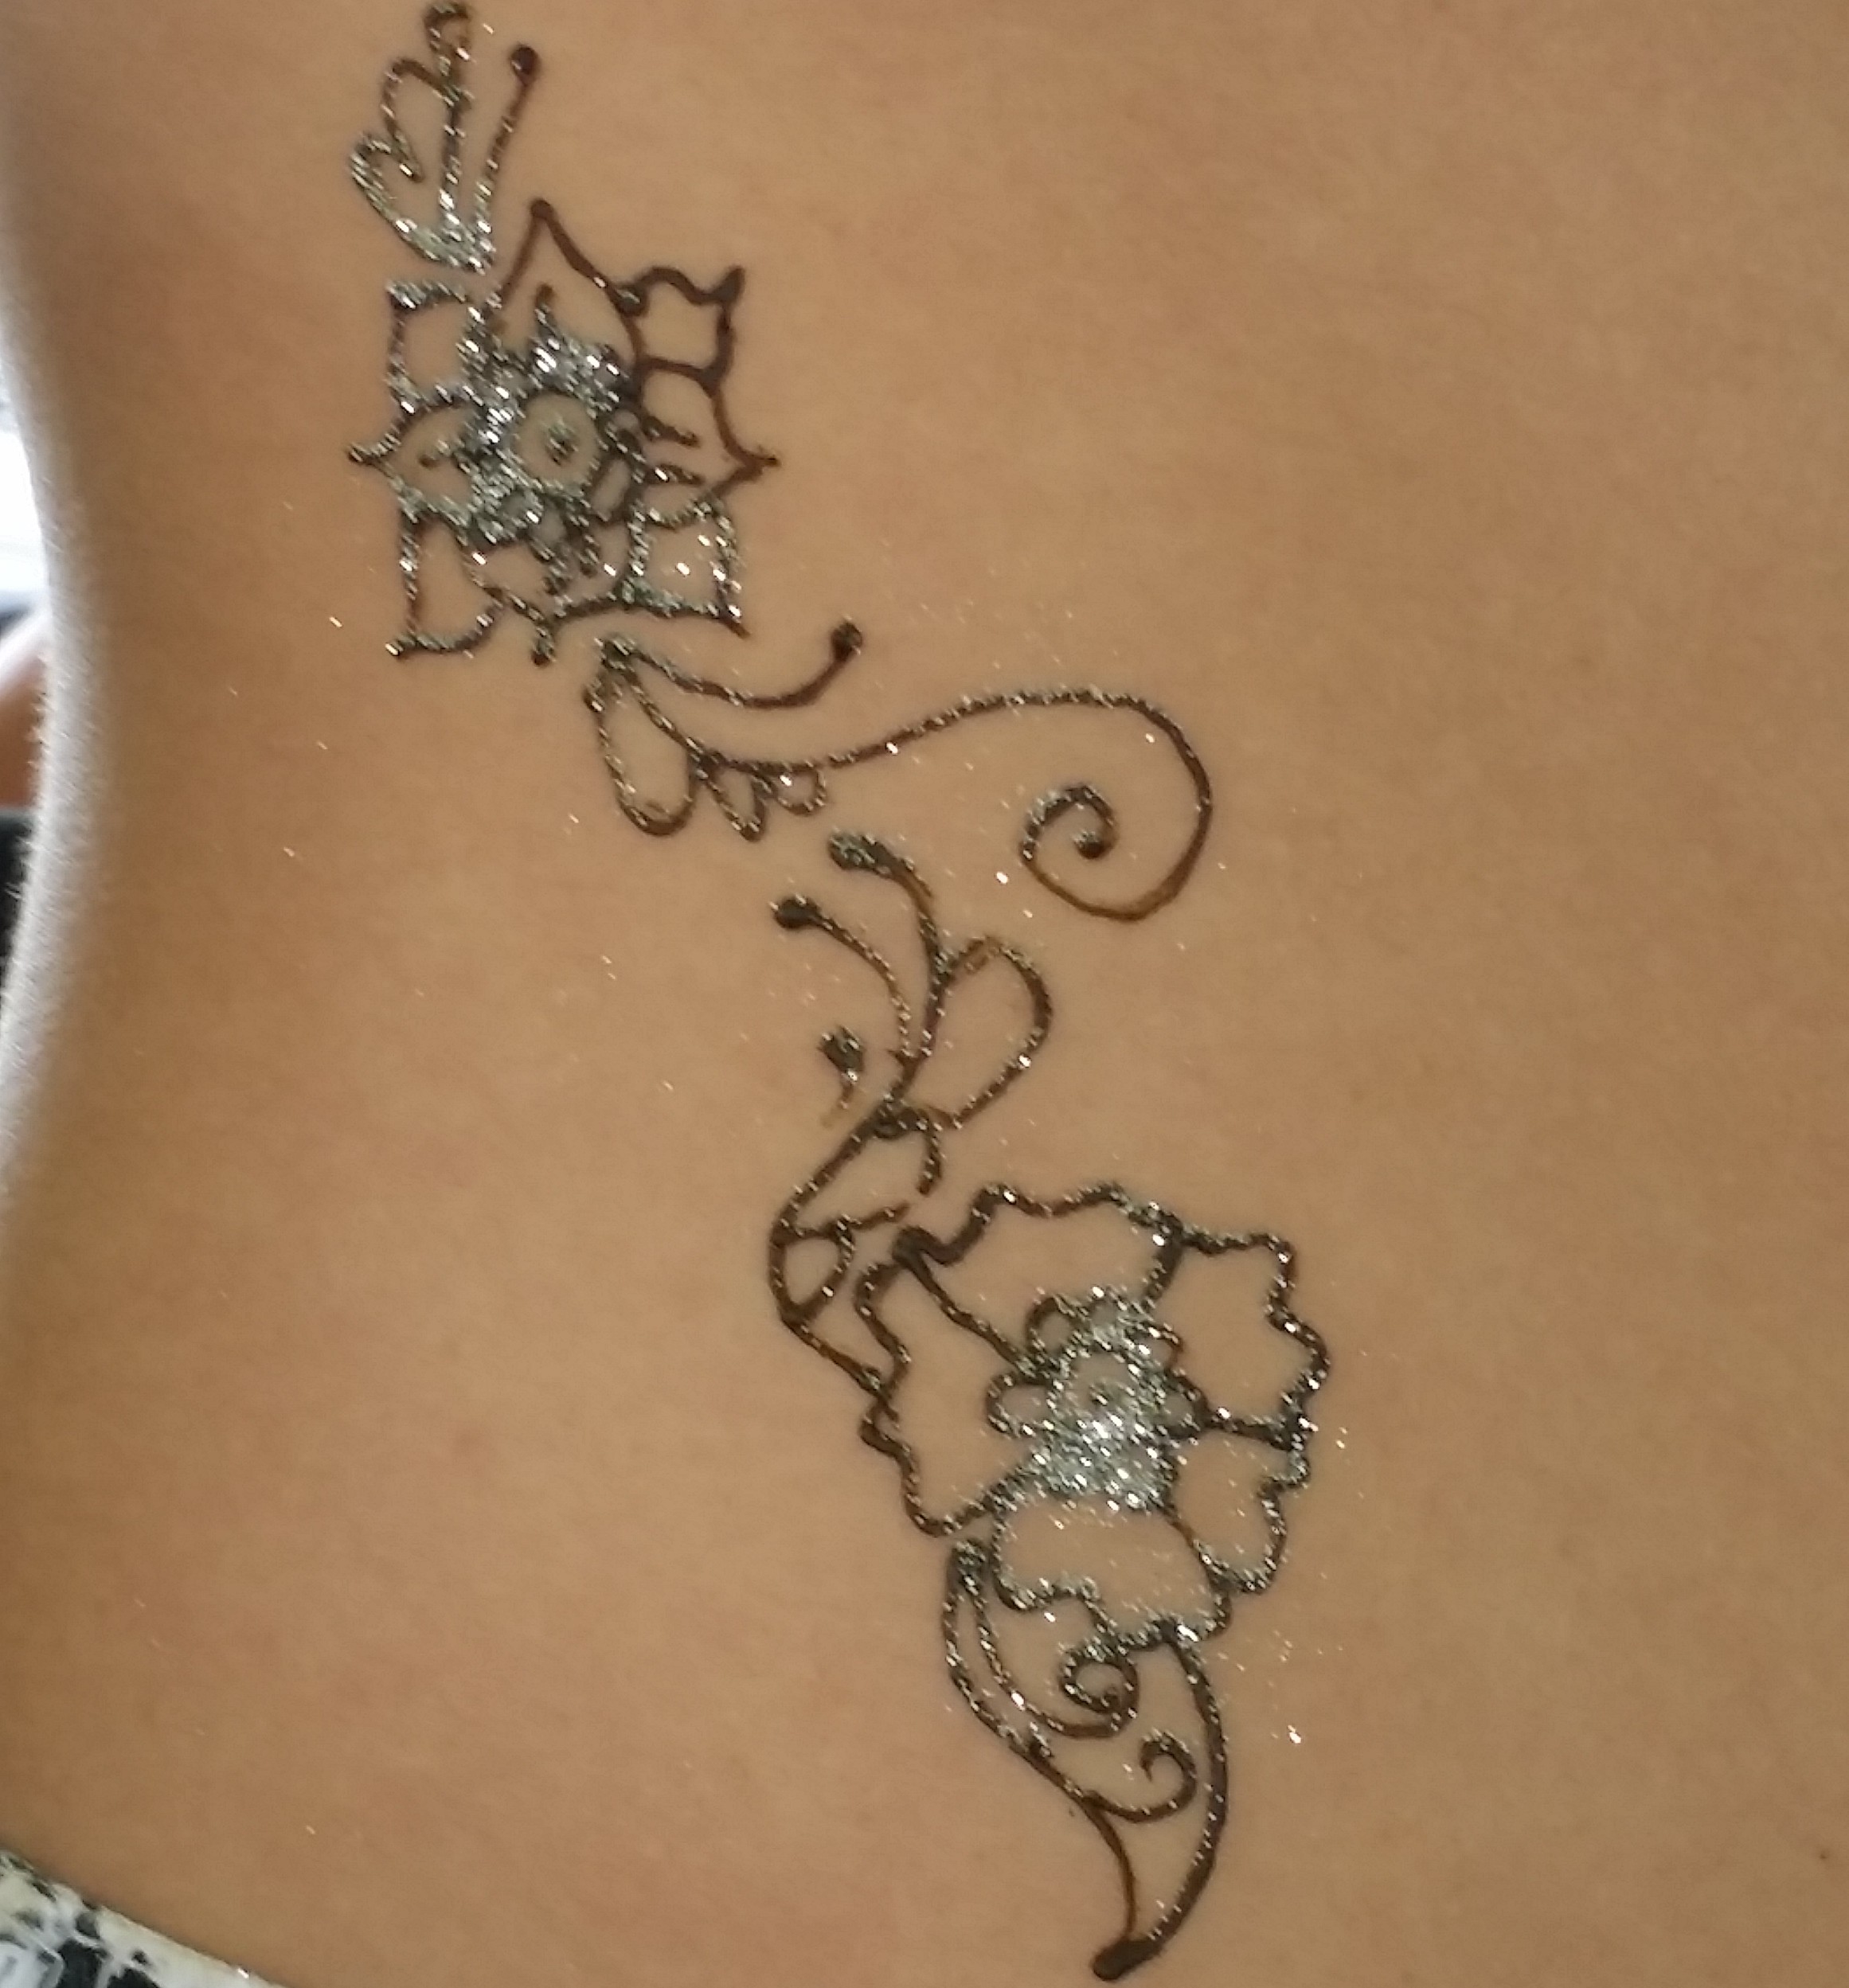  henna tattoo side